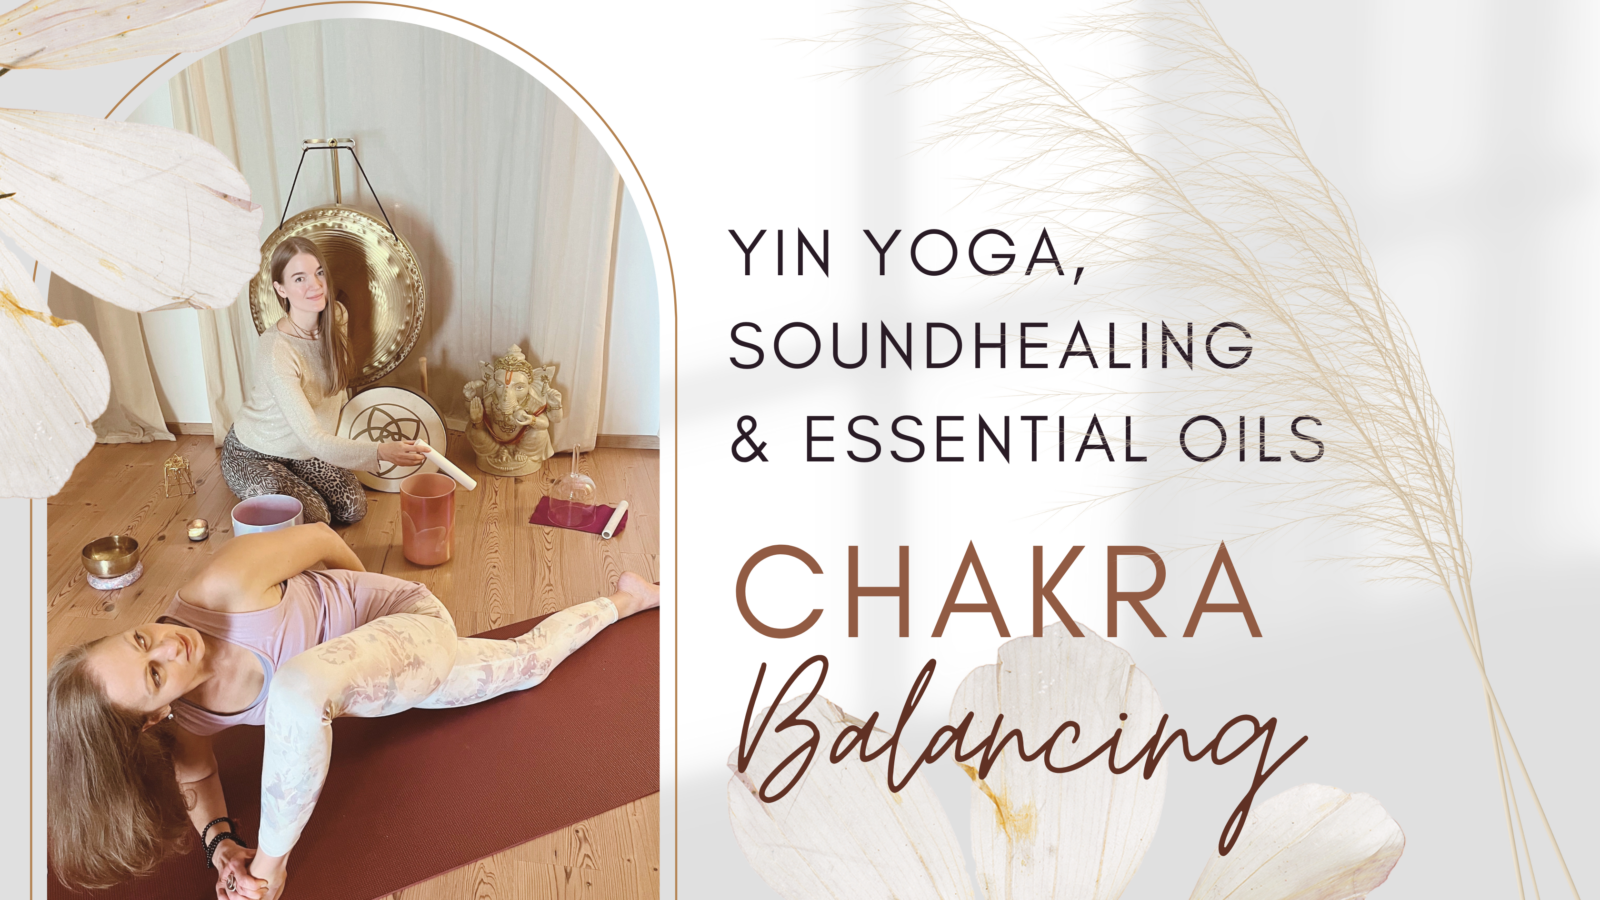 Chakra Balancing: a Sound, Scent & Yin Yoga Ritual with the Chakras ...